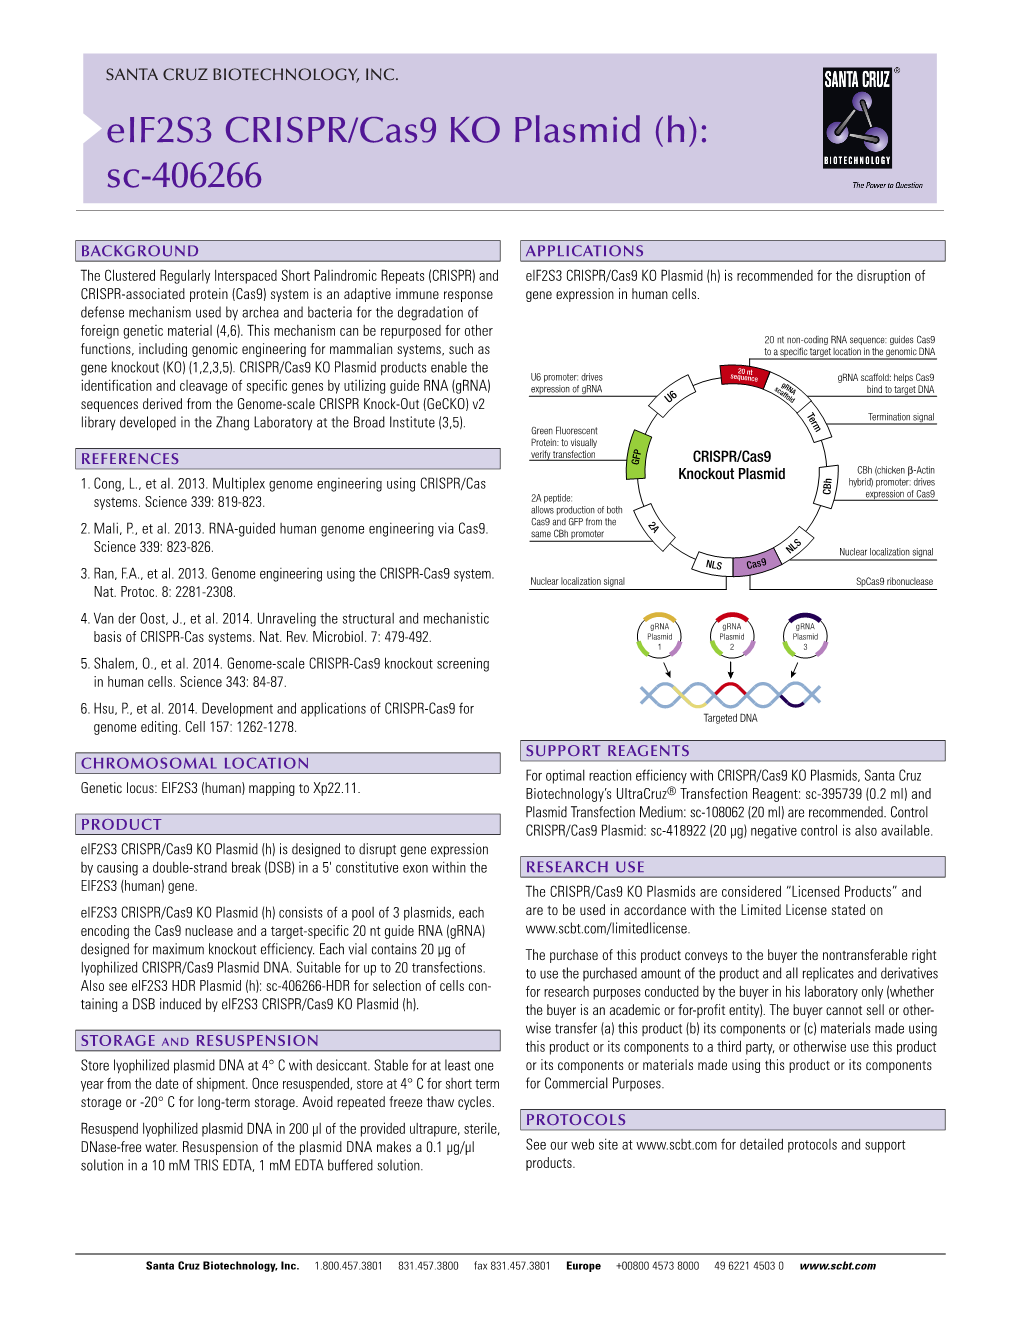 Eif2s3 CRISPR/Cas9 KO Plasmid (H): Sc-406266